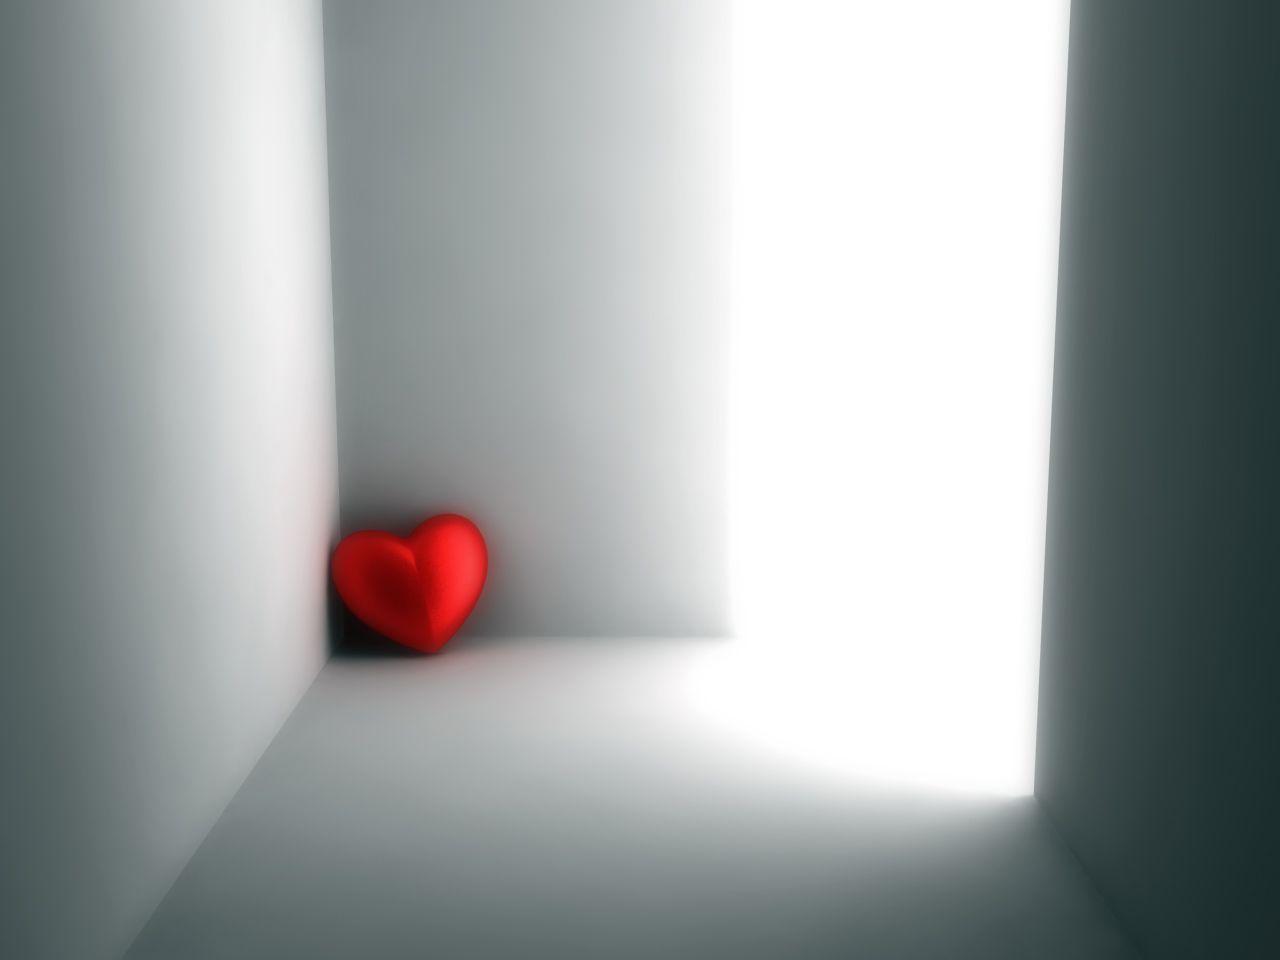 Red heart in corner wallpaper. Red heart in corner